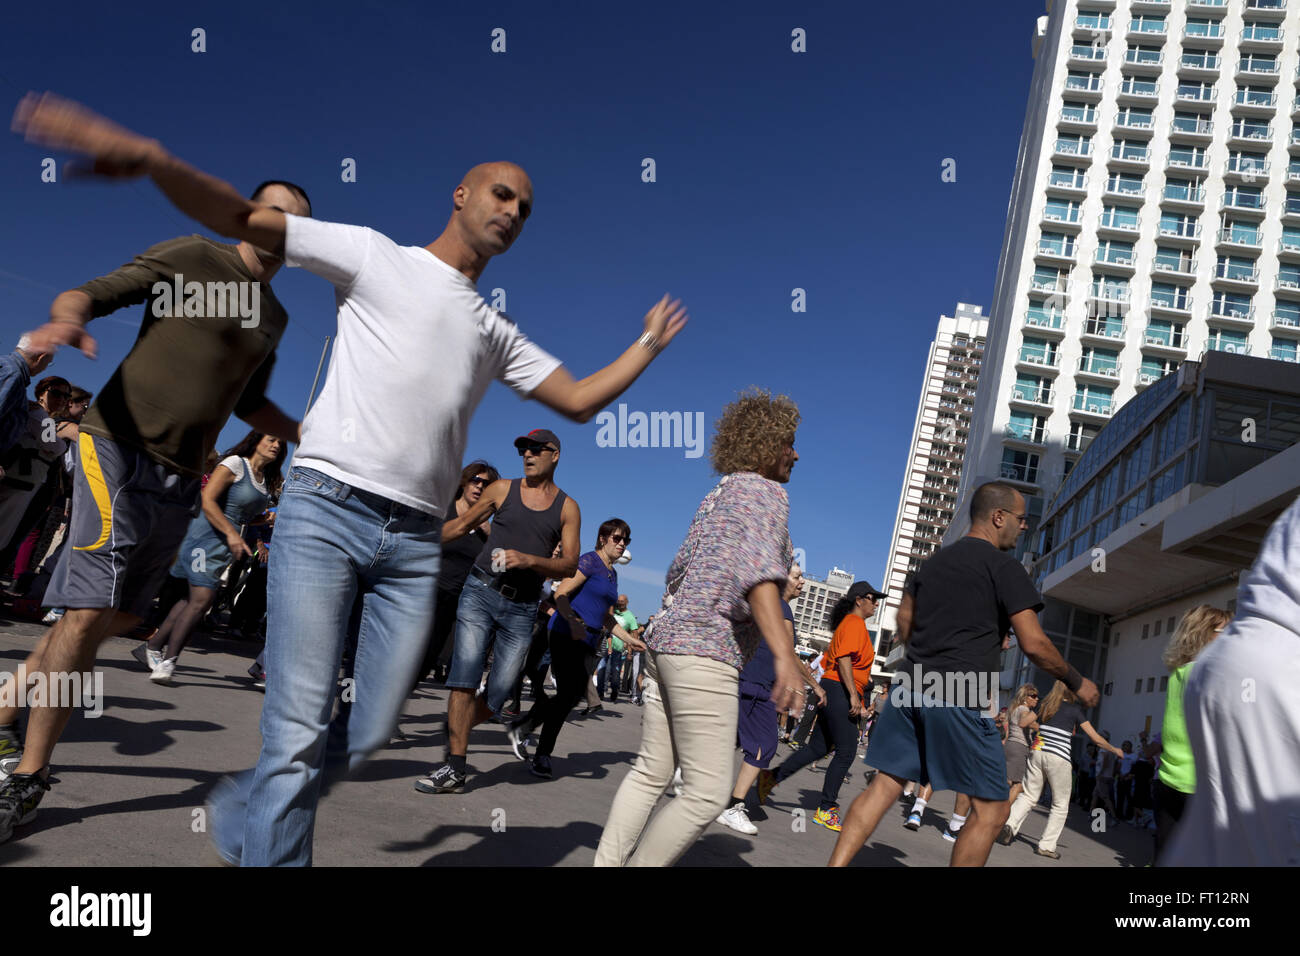 Israeli folk dances on the beach promenade, Tel-Aviv, Israel, Asia Stock Photo